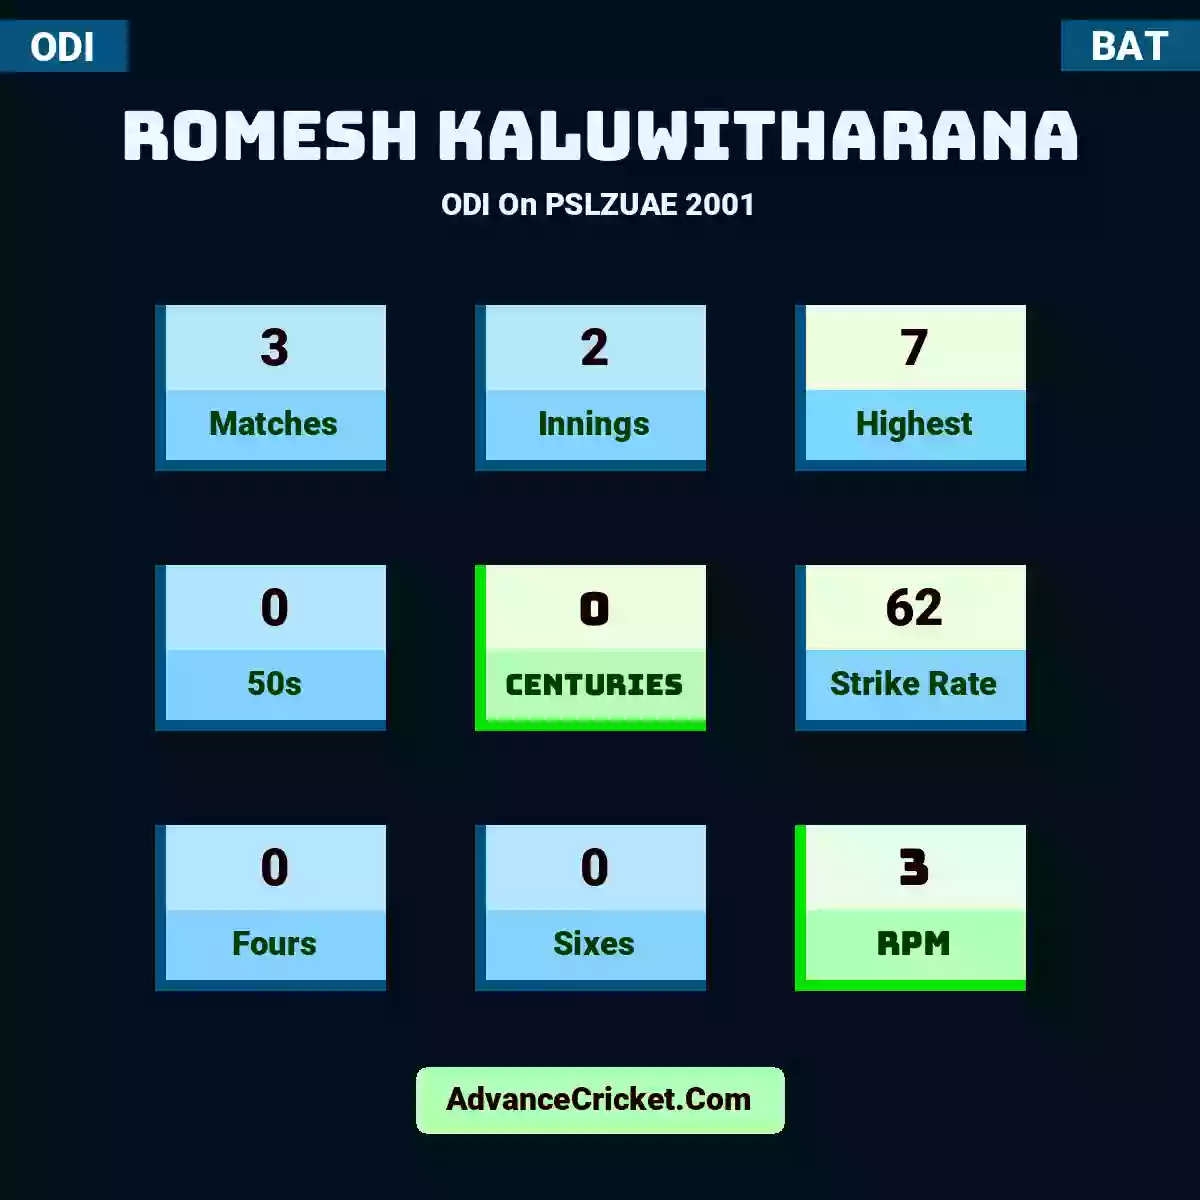 Romesh Kaluwitharana ODI  On PSLZUAE 2001, Romesh Kaluwitharana played 3 matches, scored 7 runs as highest, 0 half-centuries, and 0 centuries, with a strike rate of 62. R.Kaluwitharana hit 0 fours and 0 sixes, with an RPM of 3.